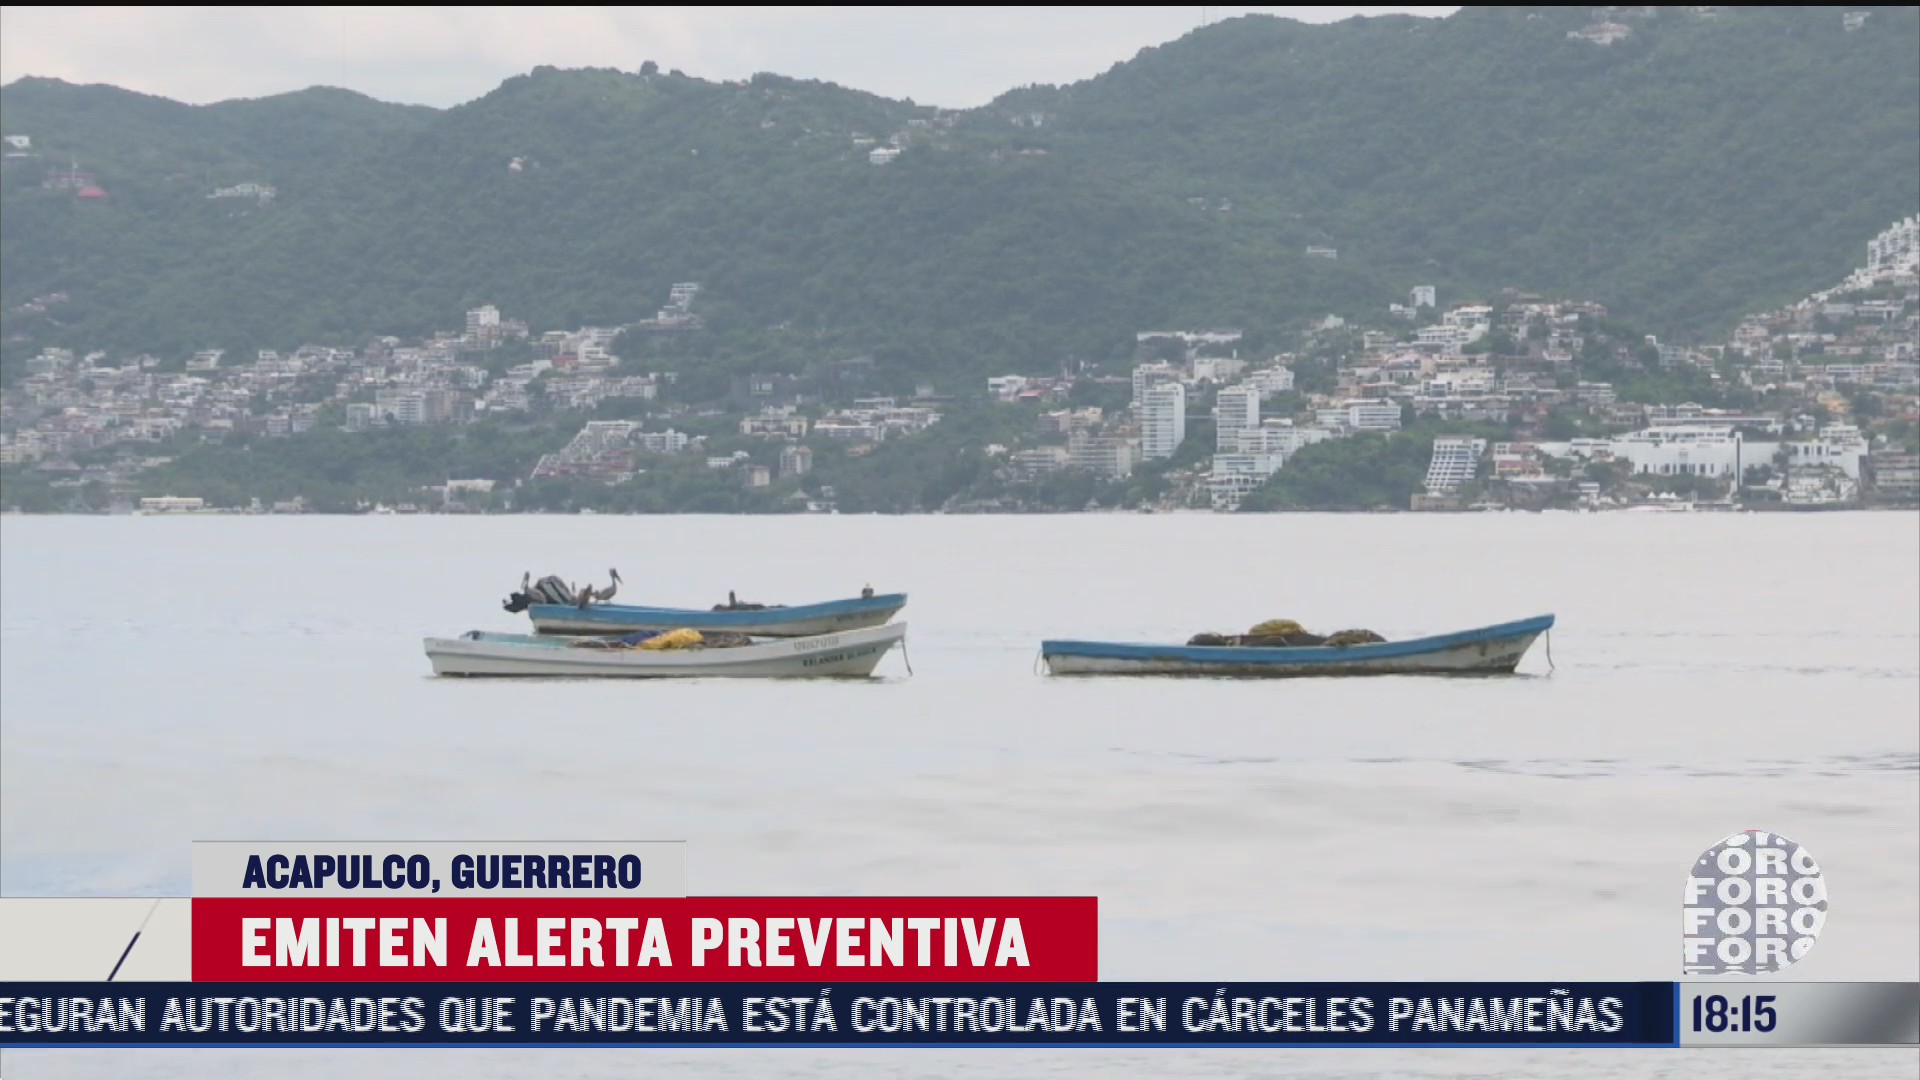 emiten alerta preventiva en acapulco por cercania de baja presion